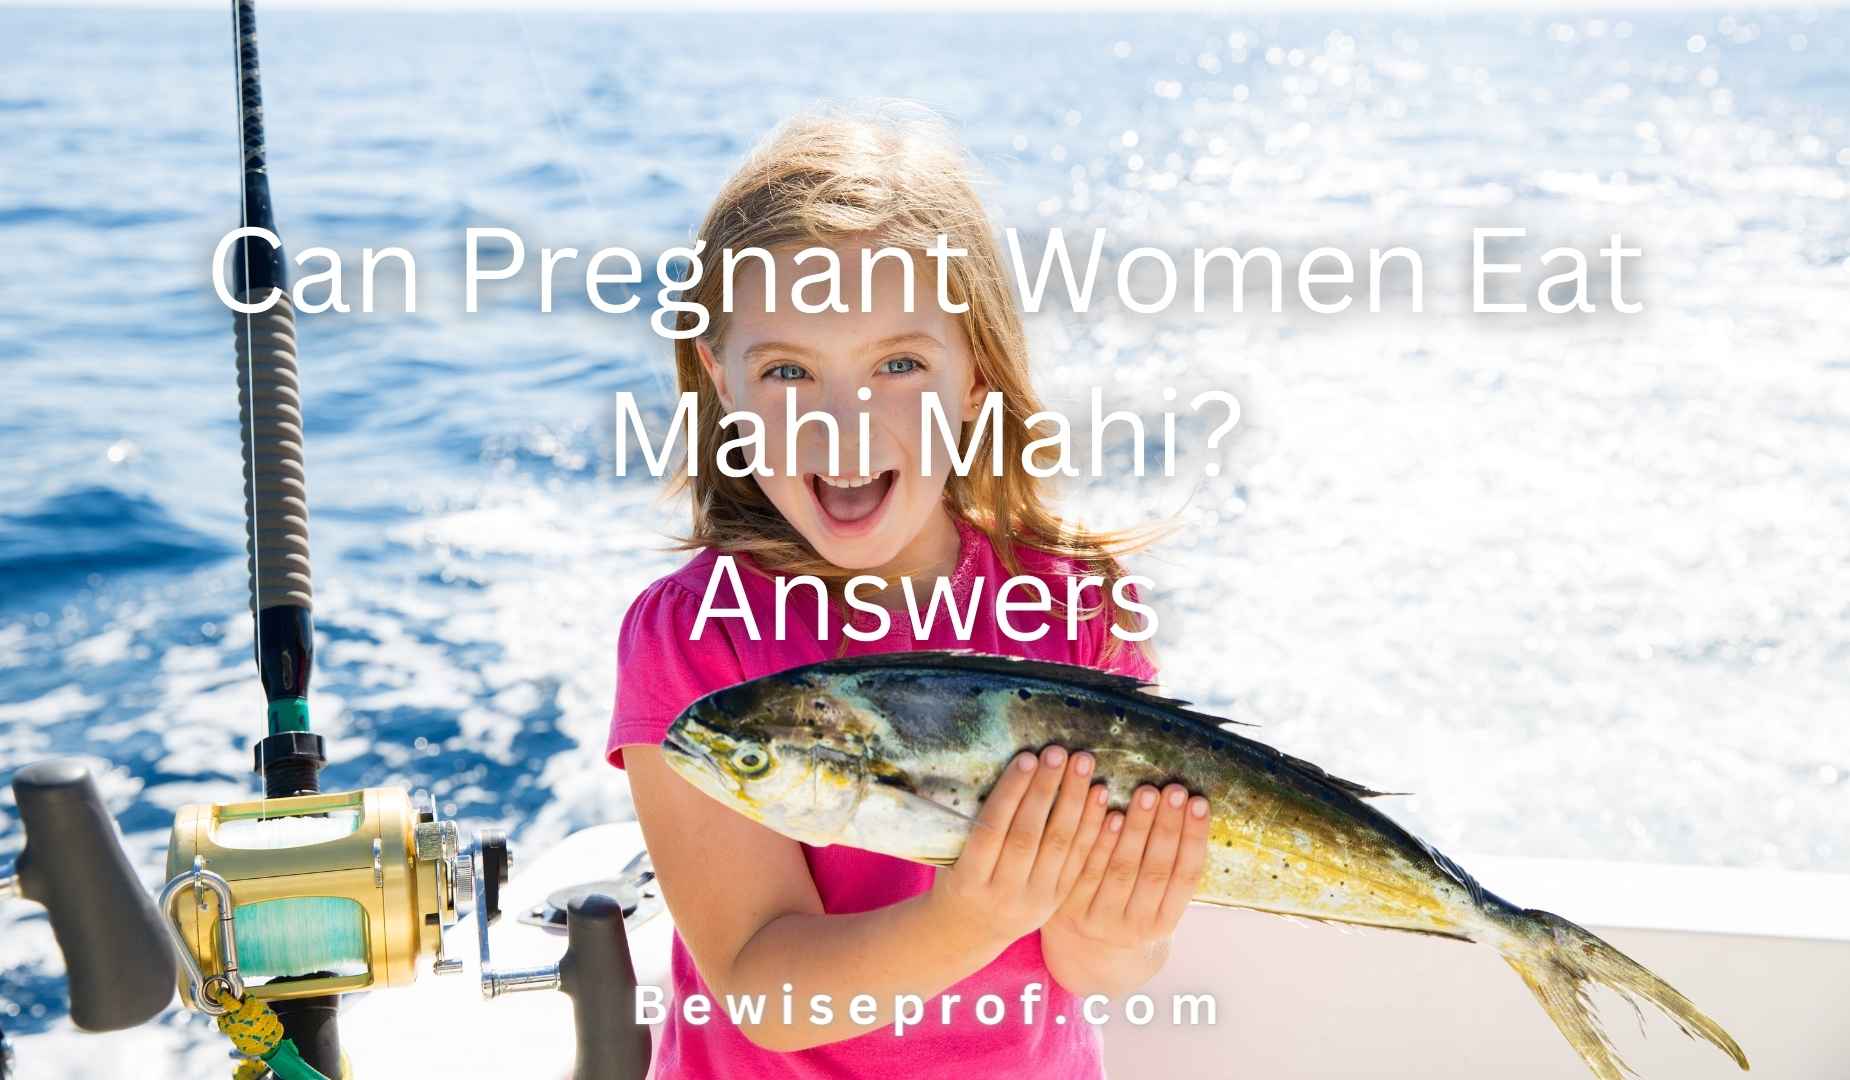 Can Pregnant Women Eat Mahi Mahi? Answers